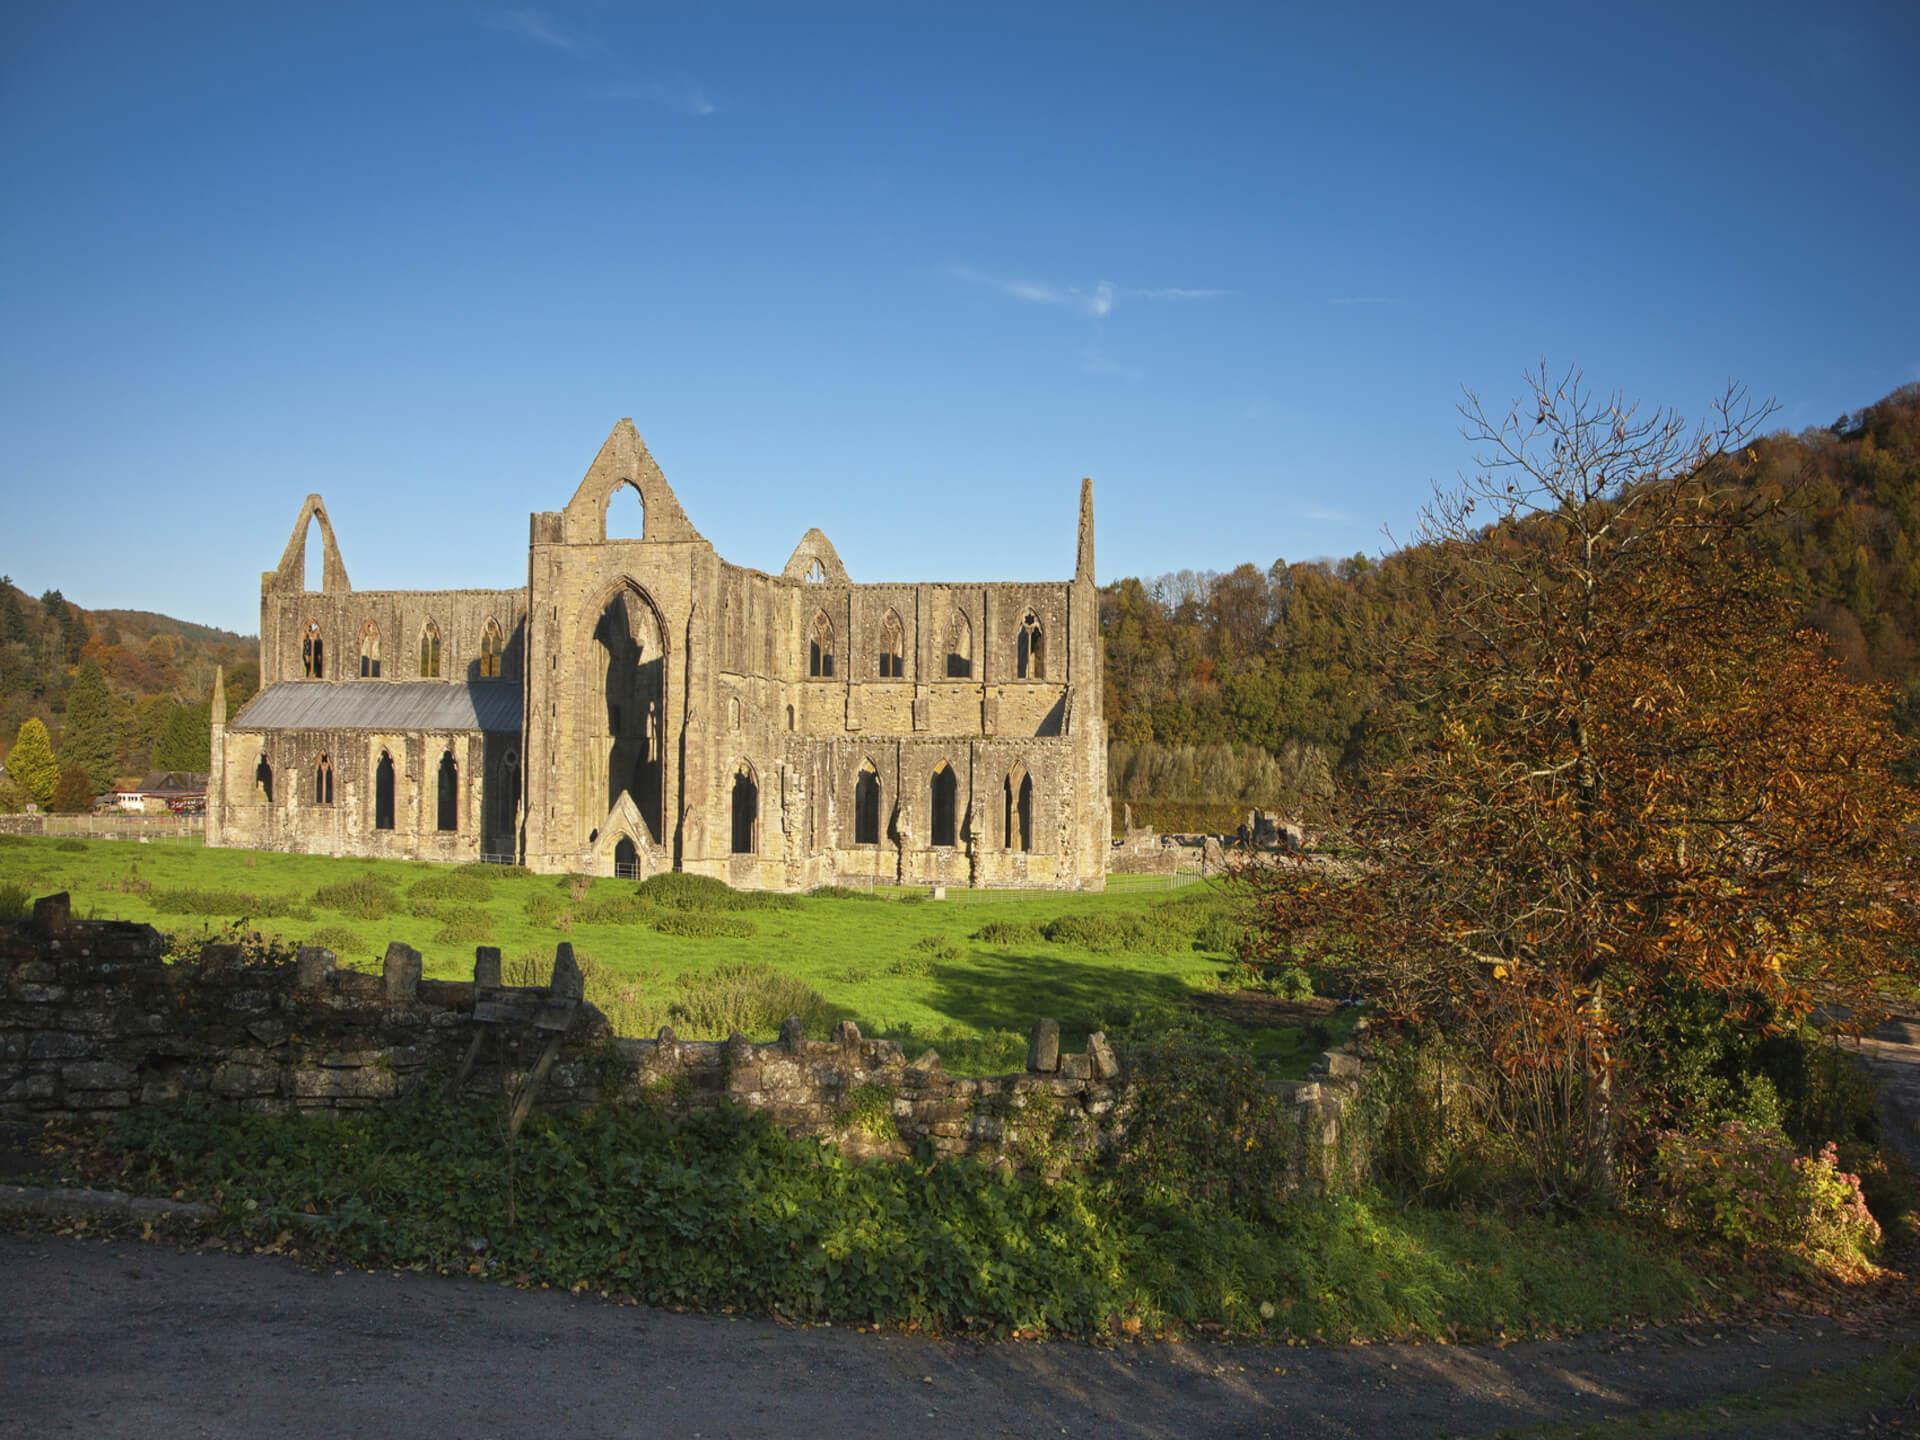 Tintern Abbey, Monmouthshire